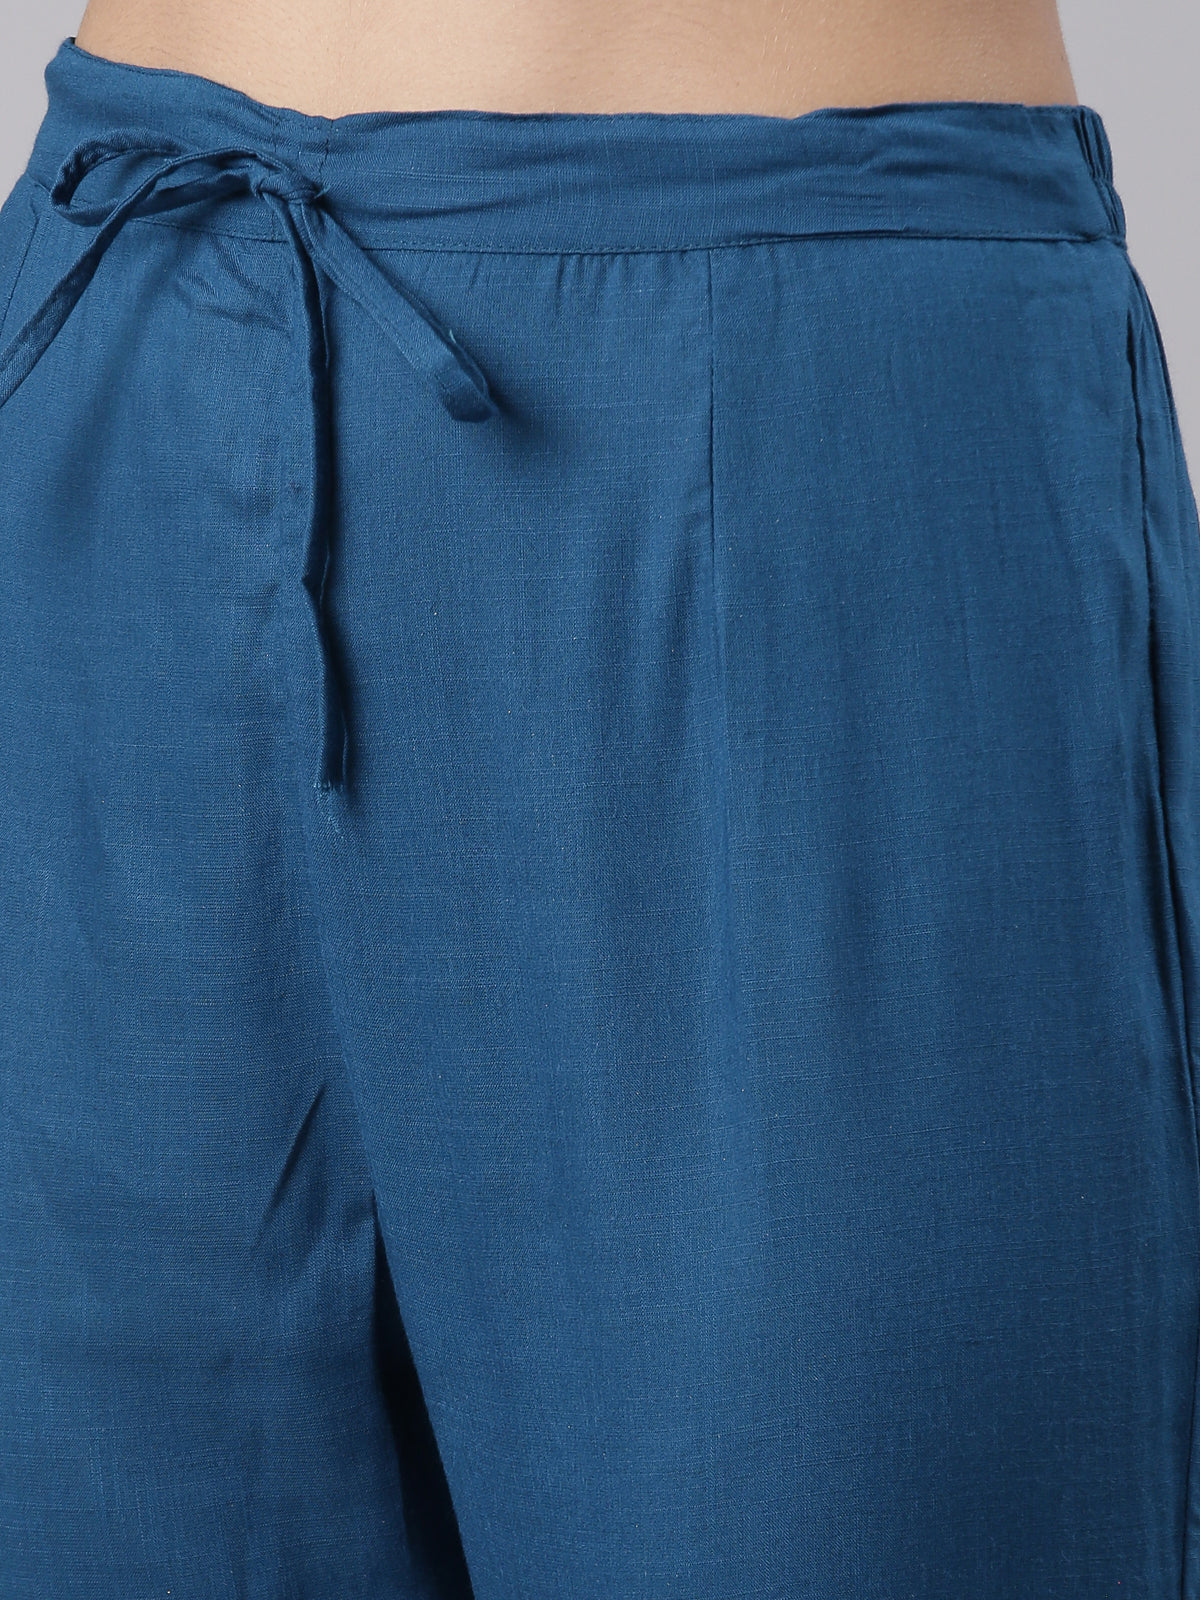 Neeru's Blue Regular Knee Length Printed Kurta Printed Trousers With Dupatta